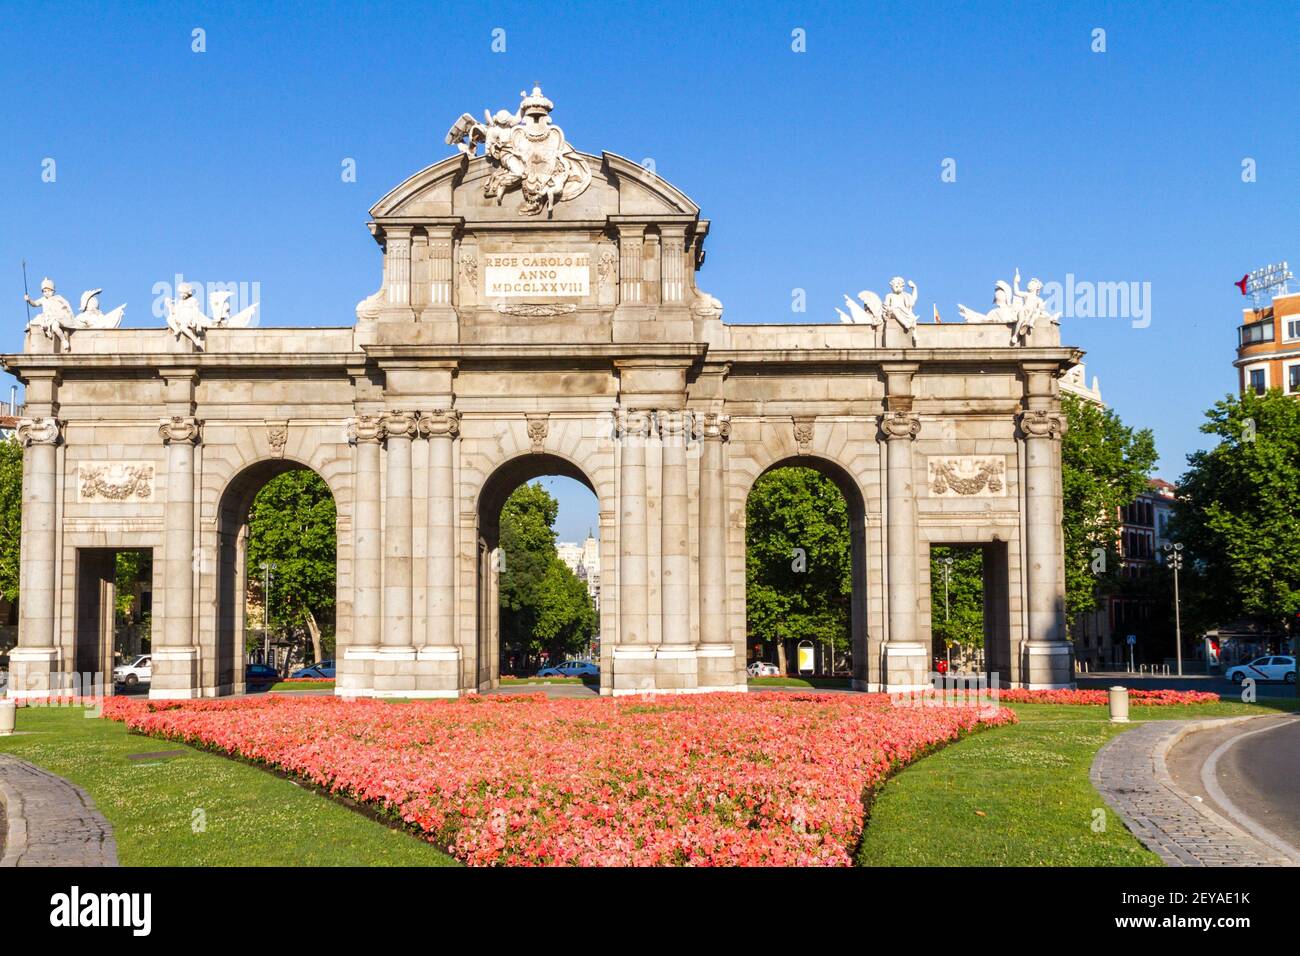 Madrid Spain Spanish Puerta de Alcala Plaza de la Independencia monument triumphal arch Neo-classical city gate Francesco Sabatini Stock Photo